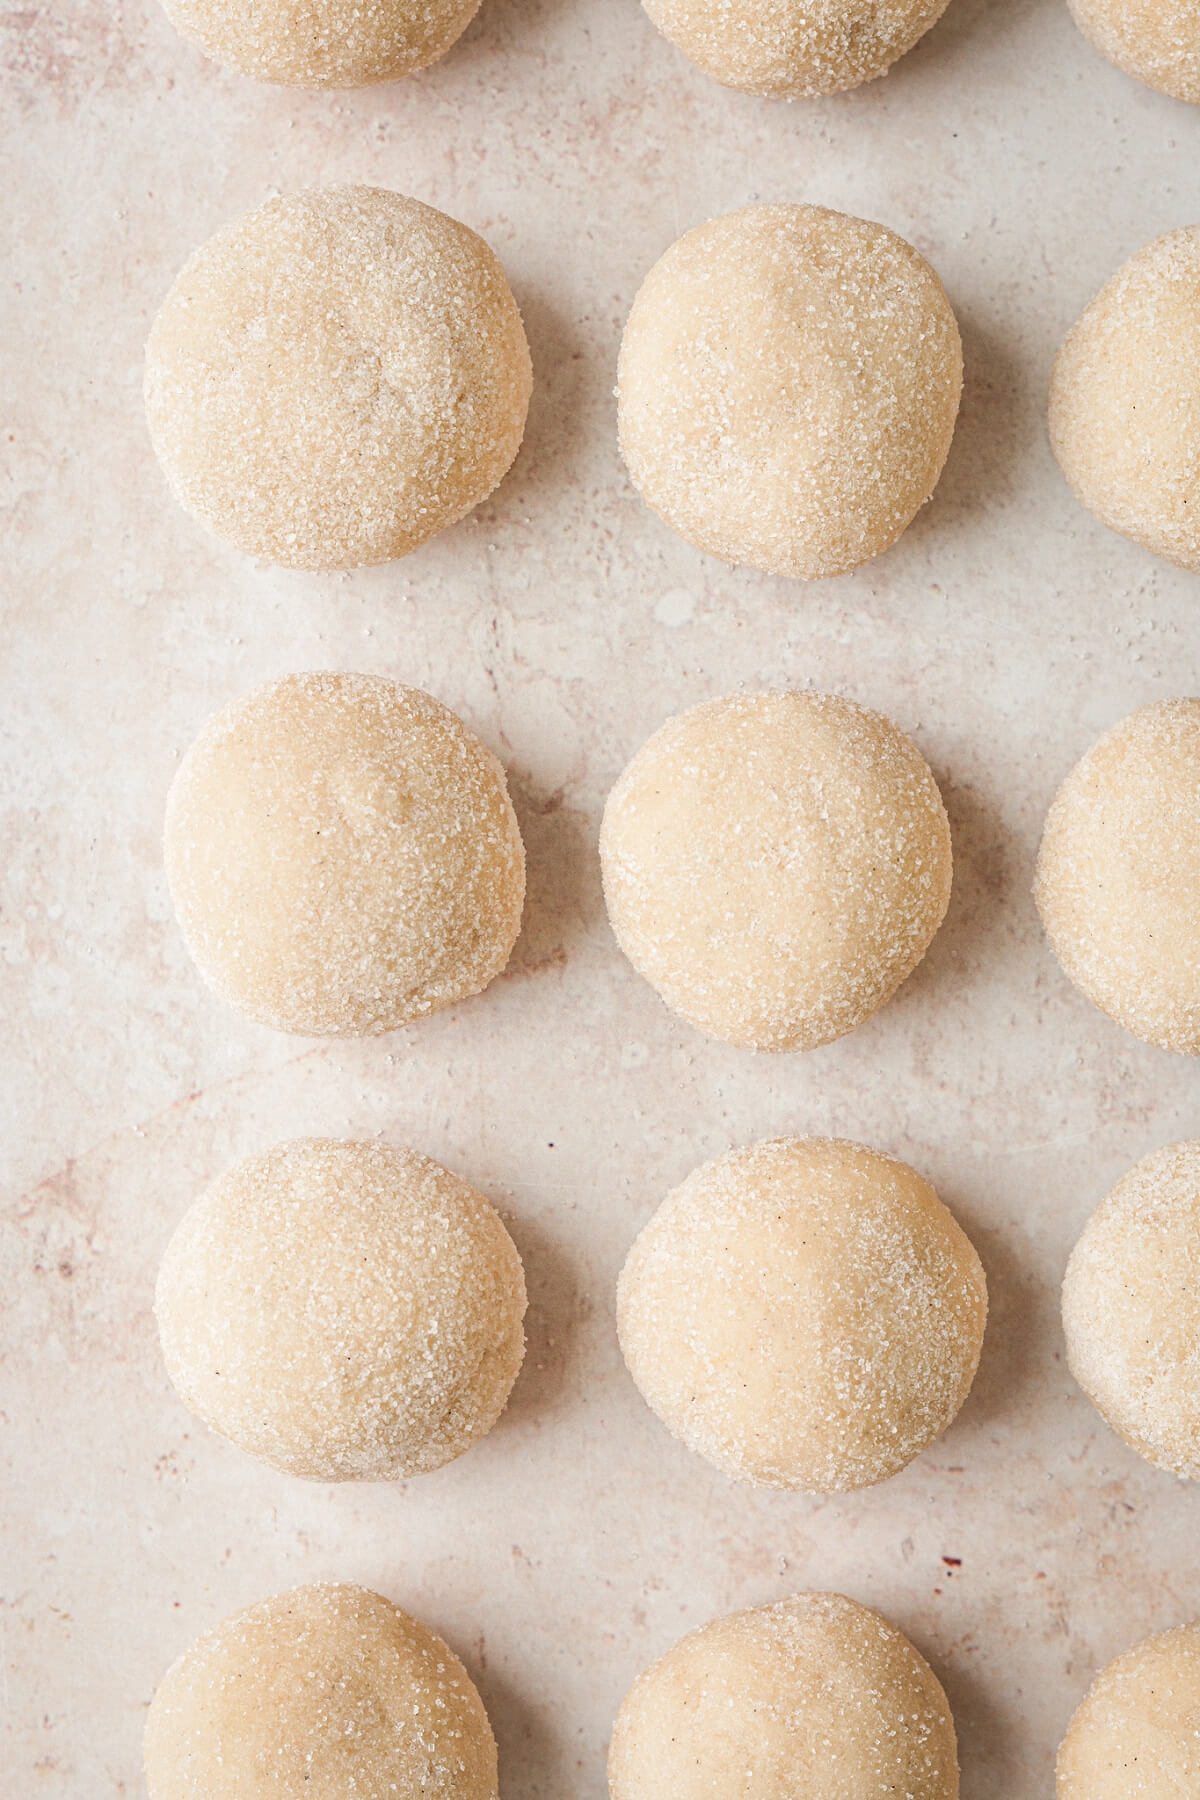 Soft sugar cookie dough balls.